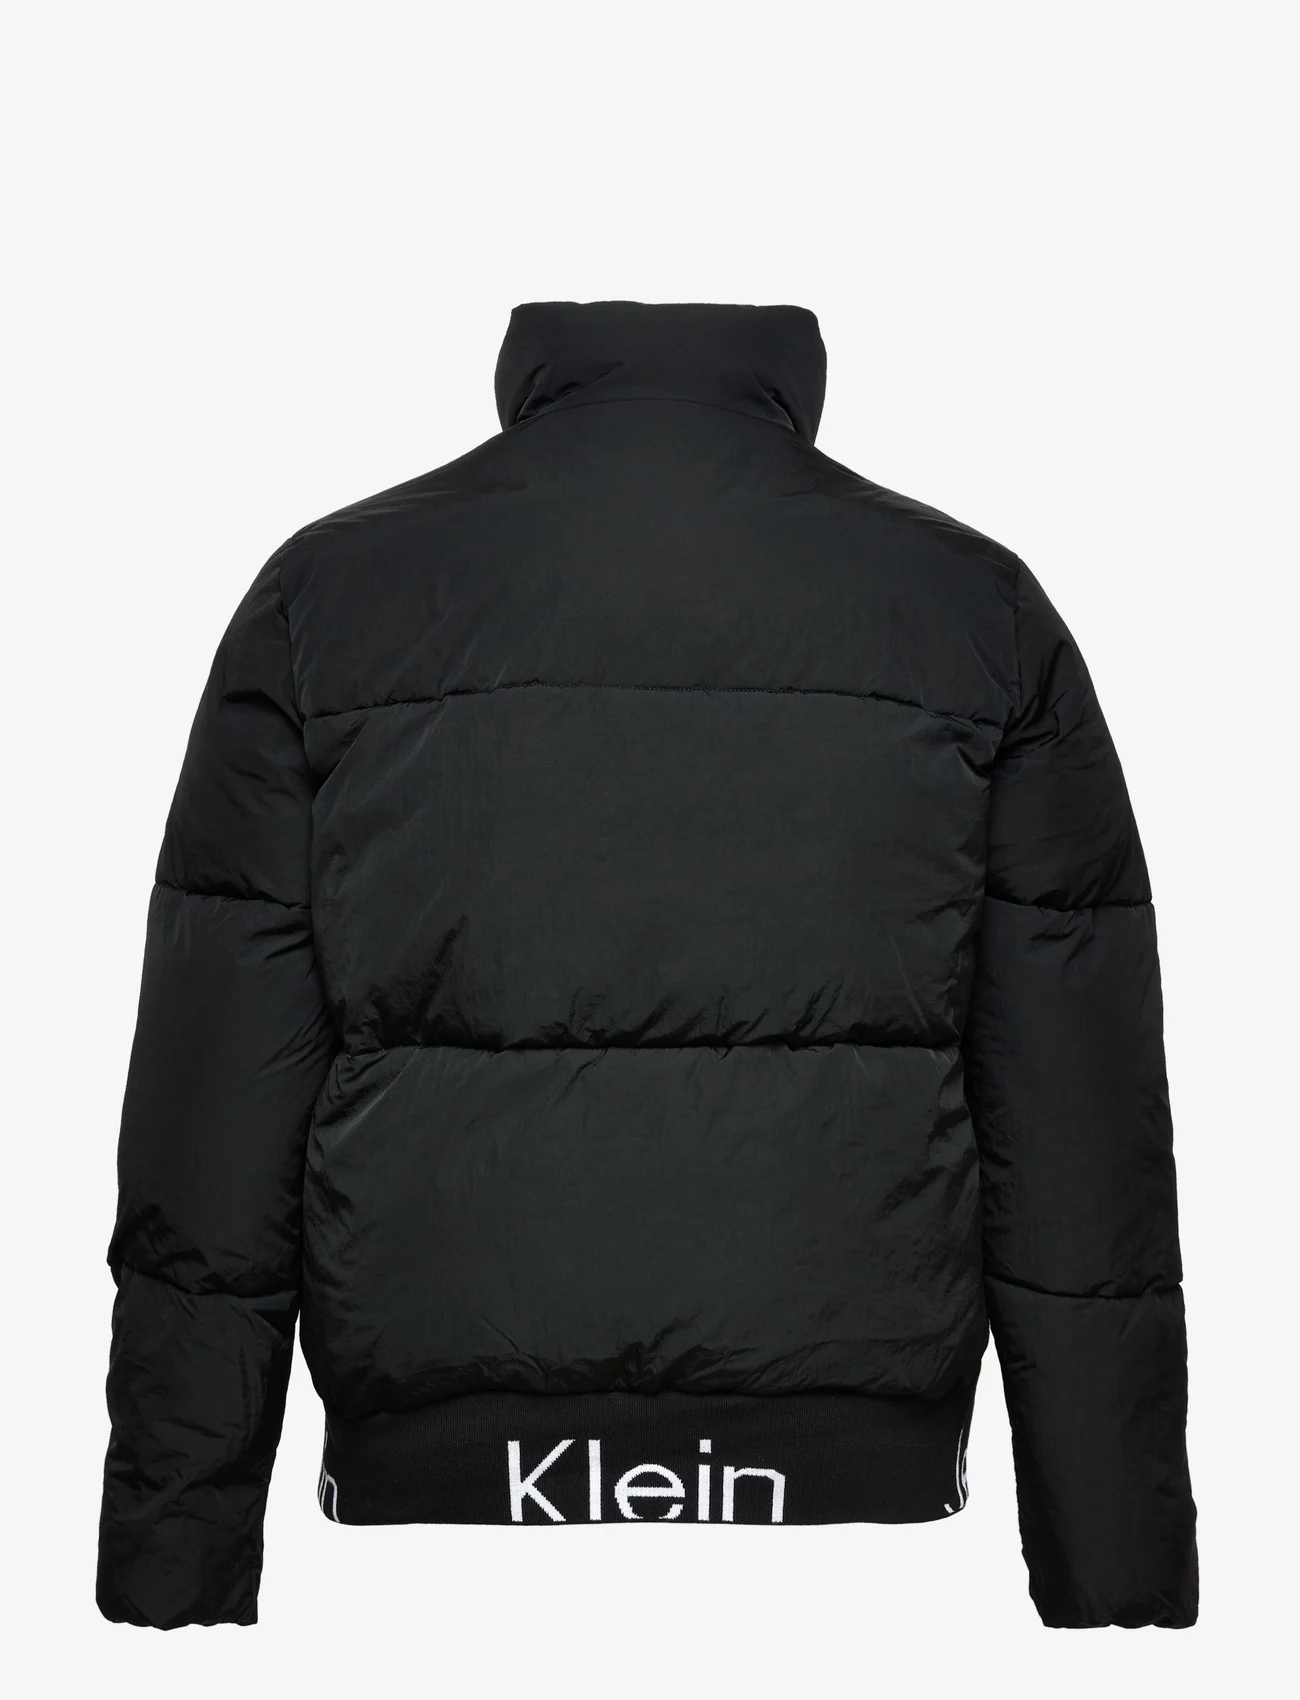 Calvin Klein Jeans - PLUS LOGO HEM SHORT PUFFER - forede jakker - ck black - 1